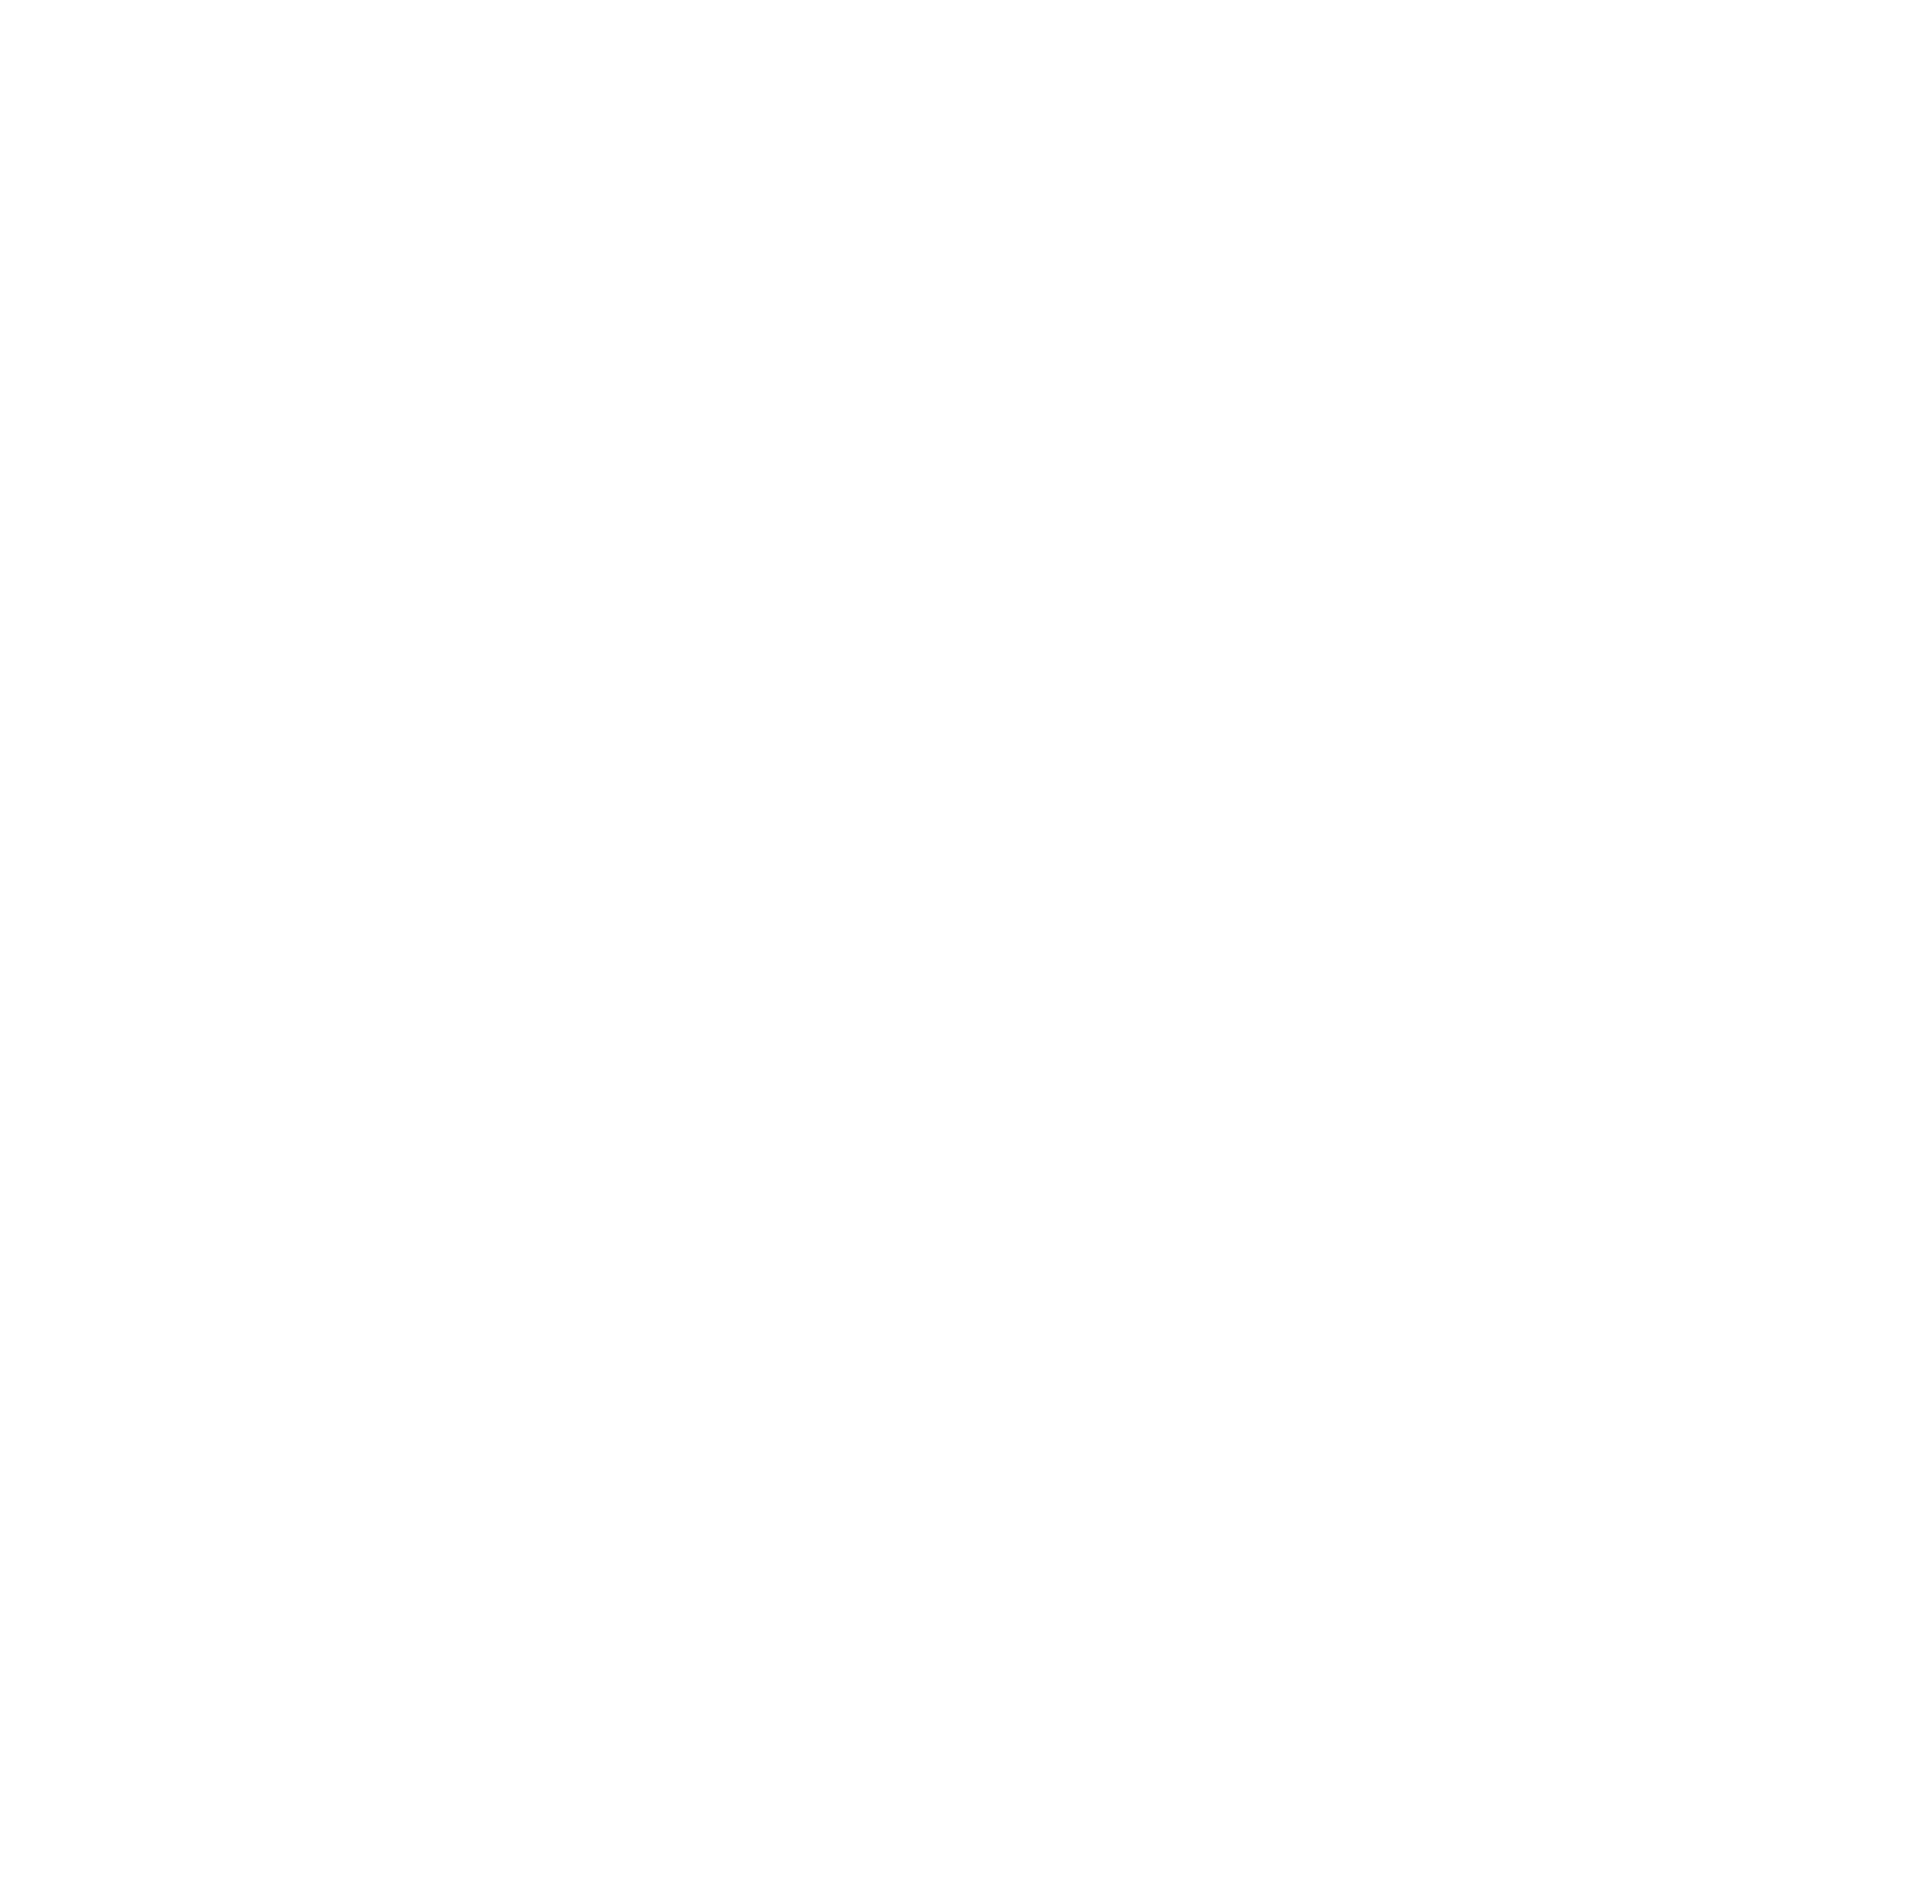 Driftwood Cafe Emsworth Ltd